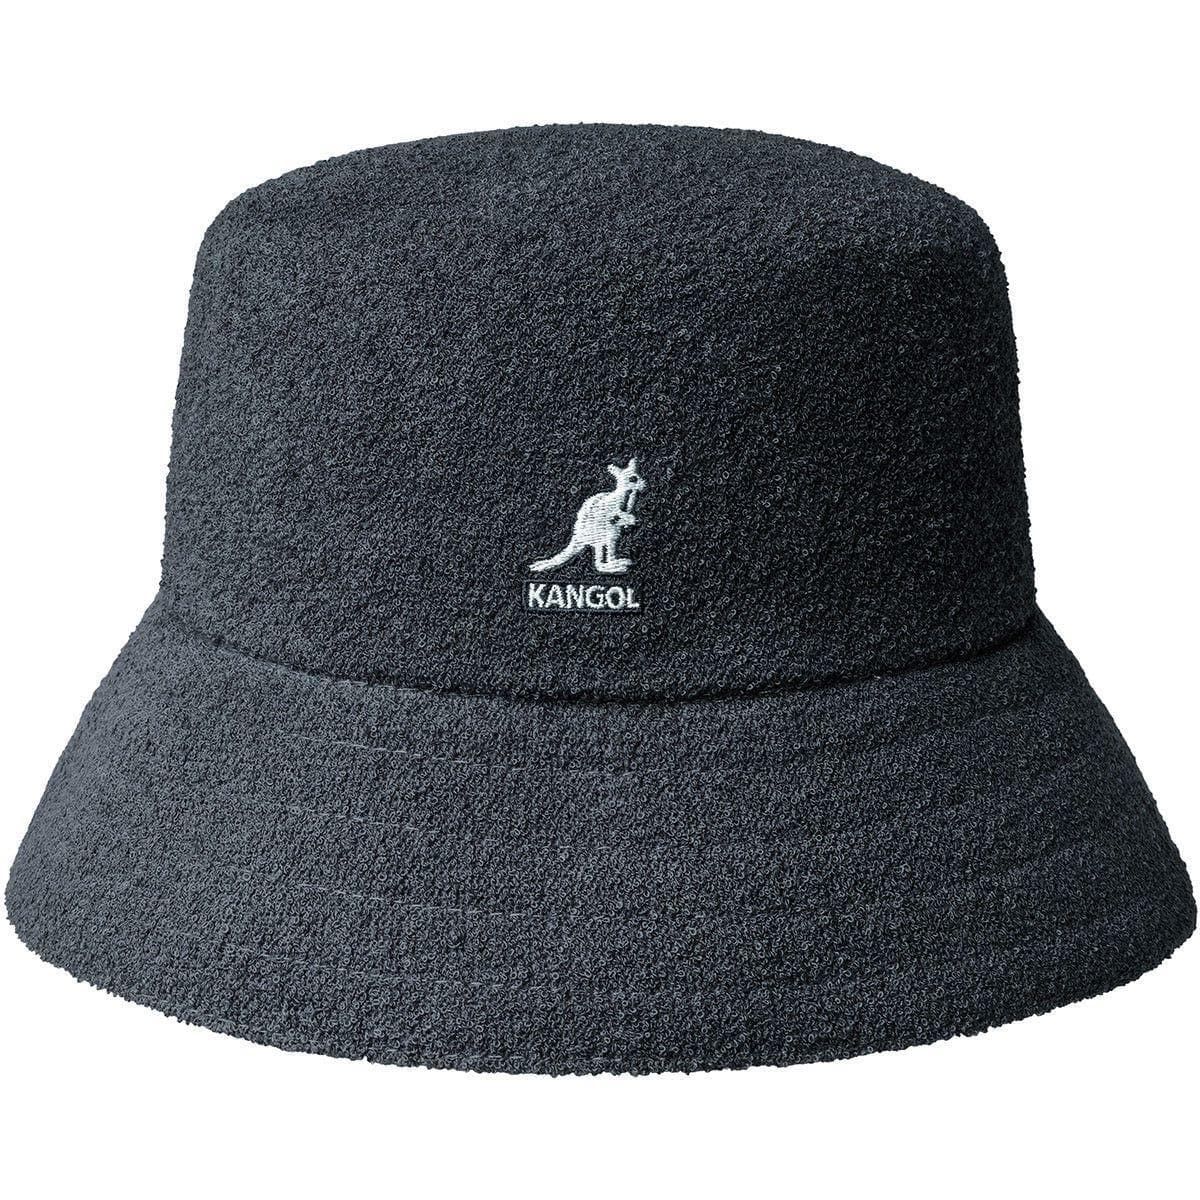 KANGOL - Bermuda bucket hat - Vittorio Citro Boutique